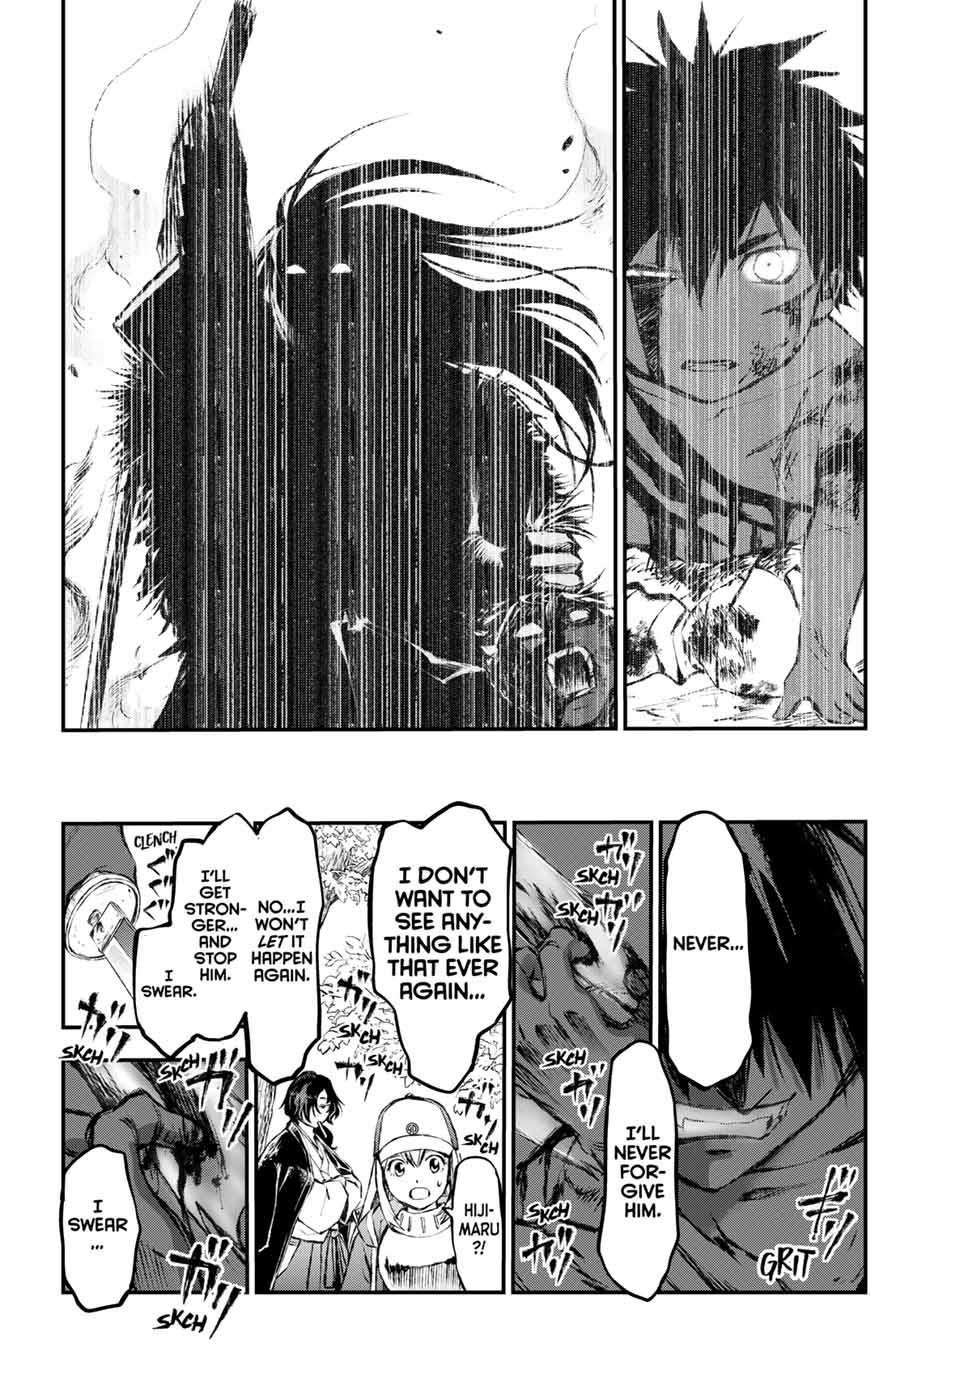 Katana Beast - chapter 6 - #4